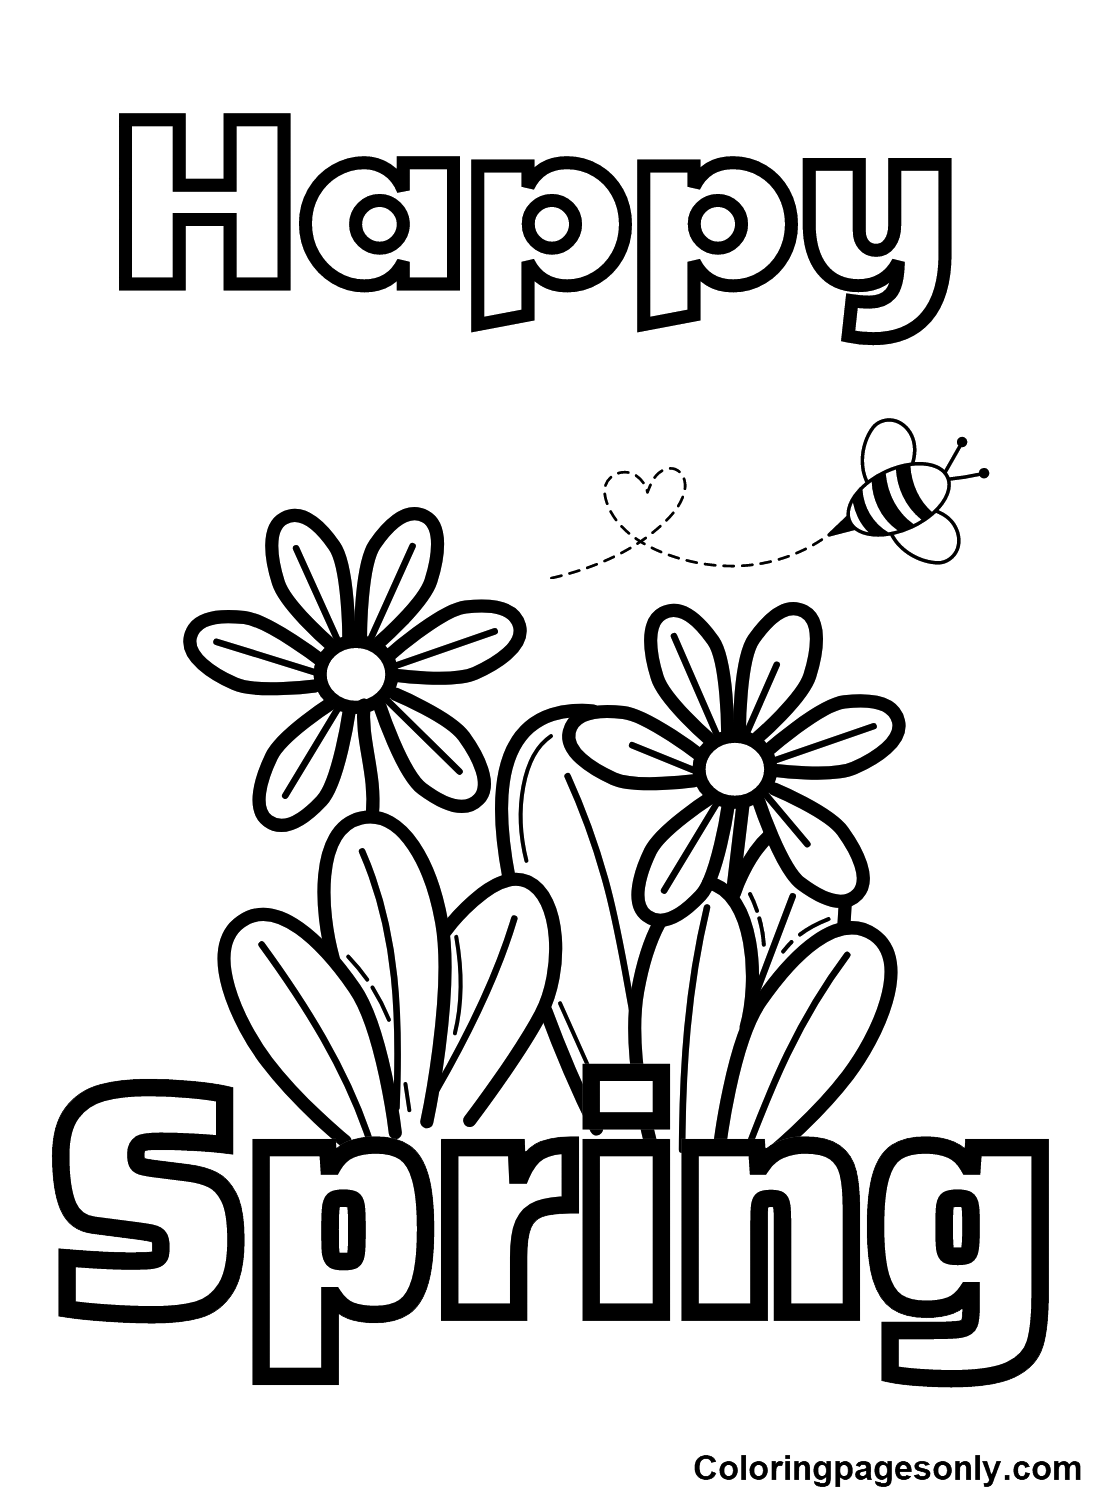 Happy Spring Coloring Page